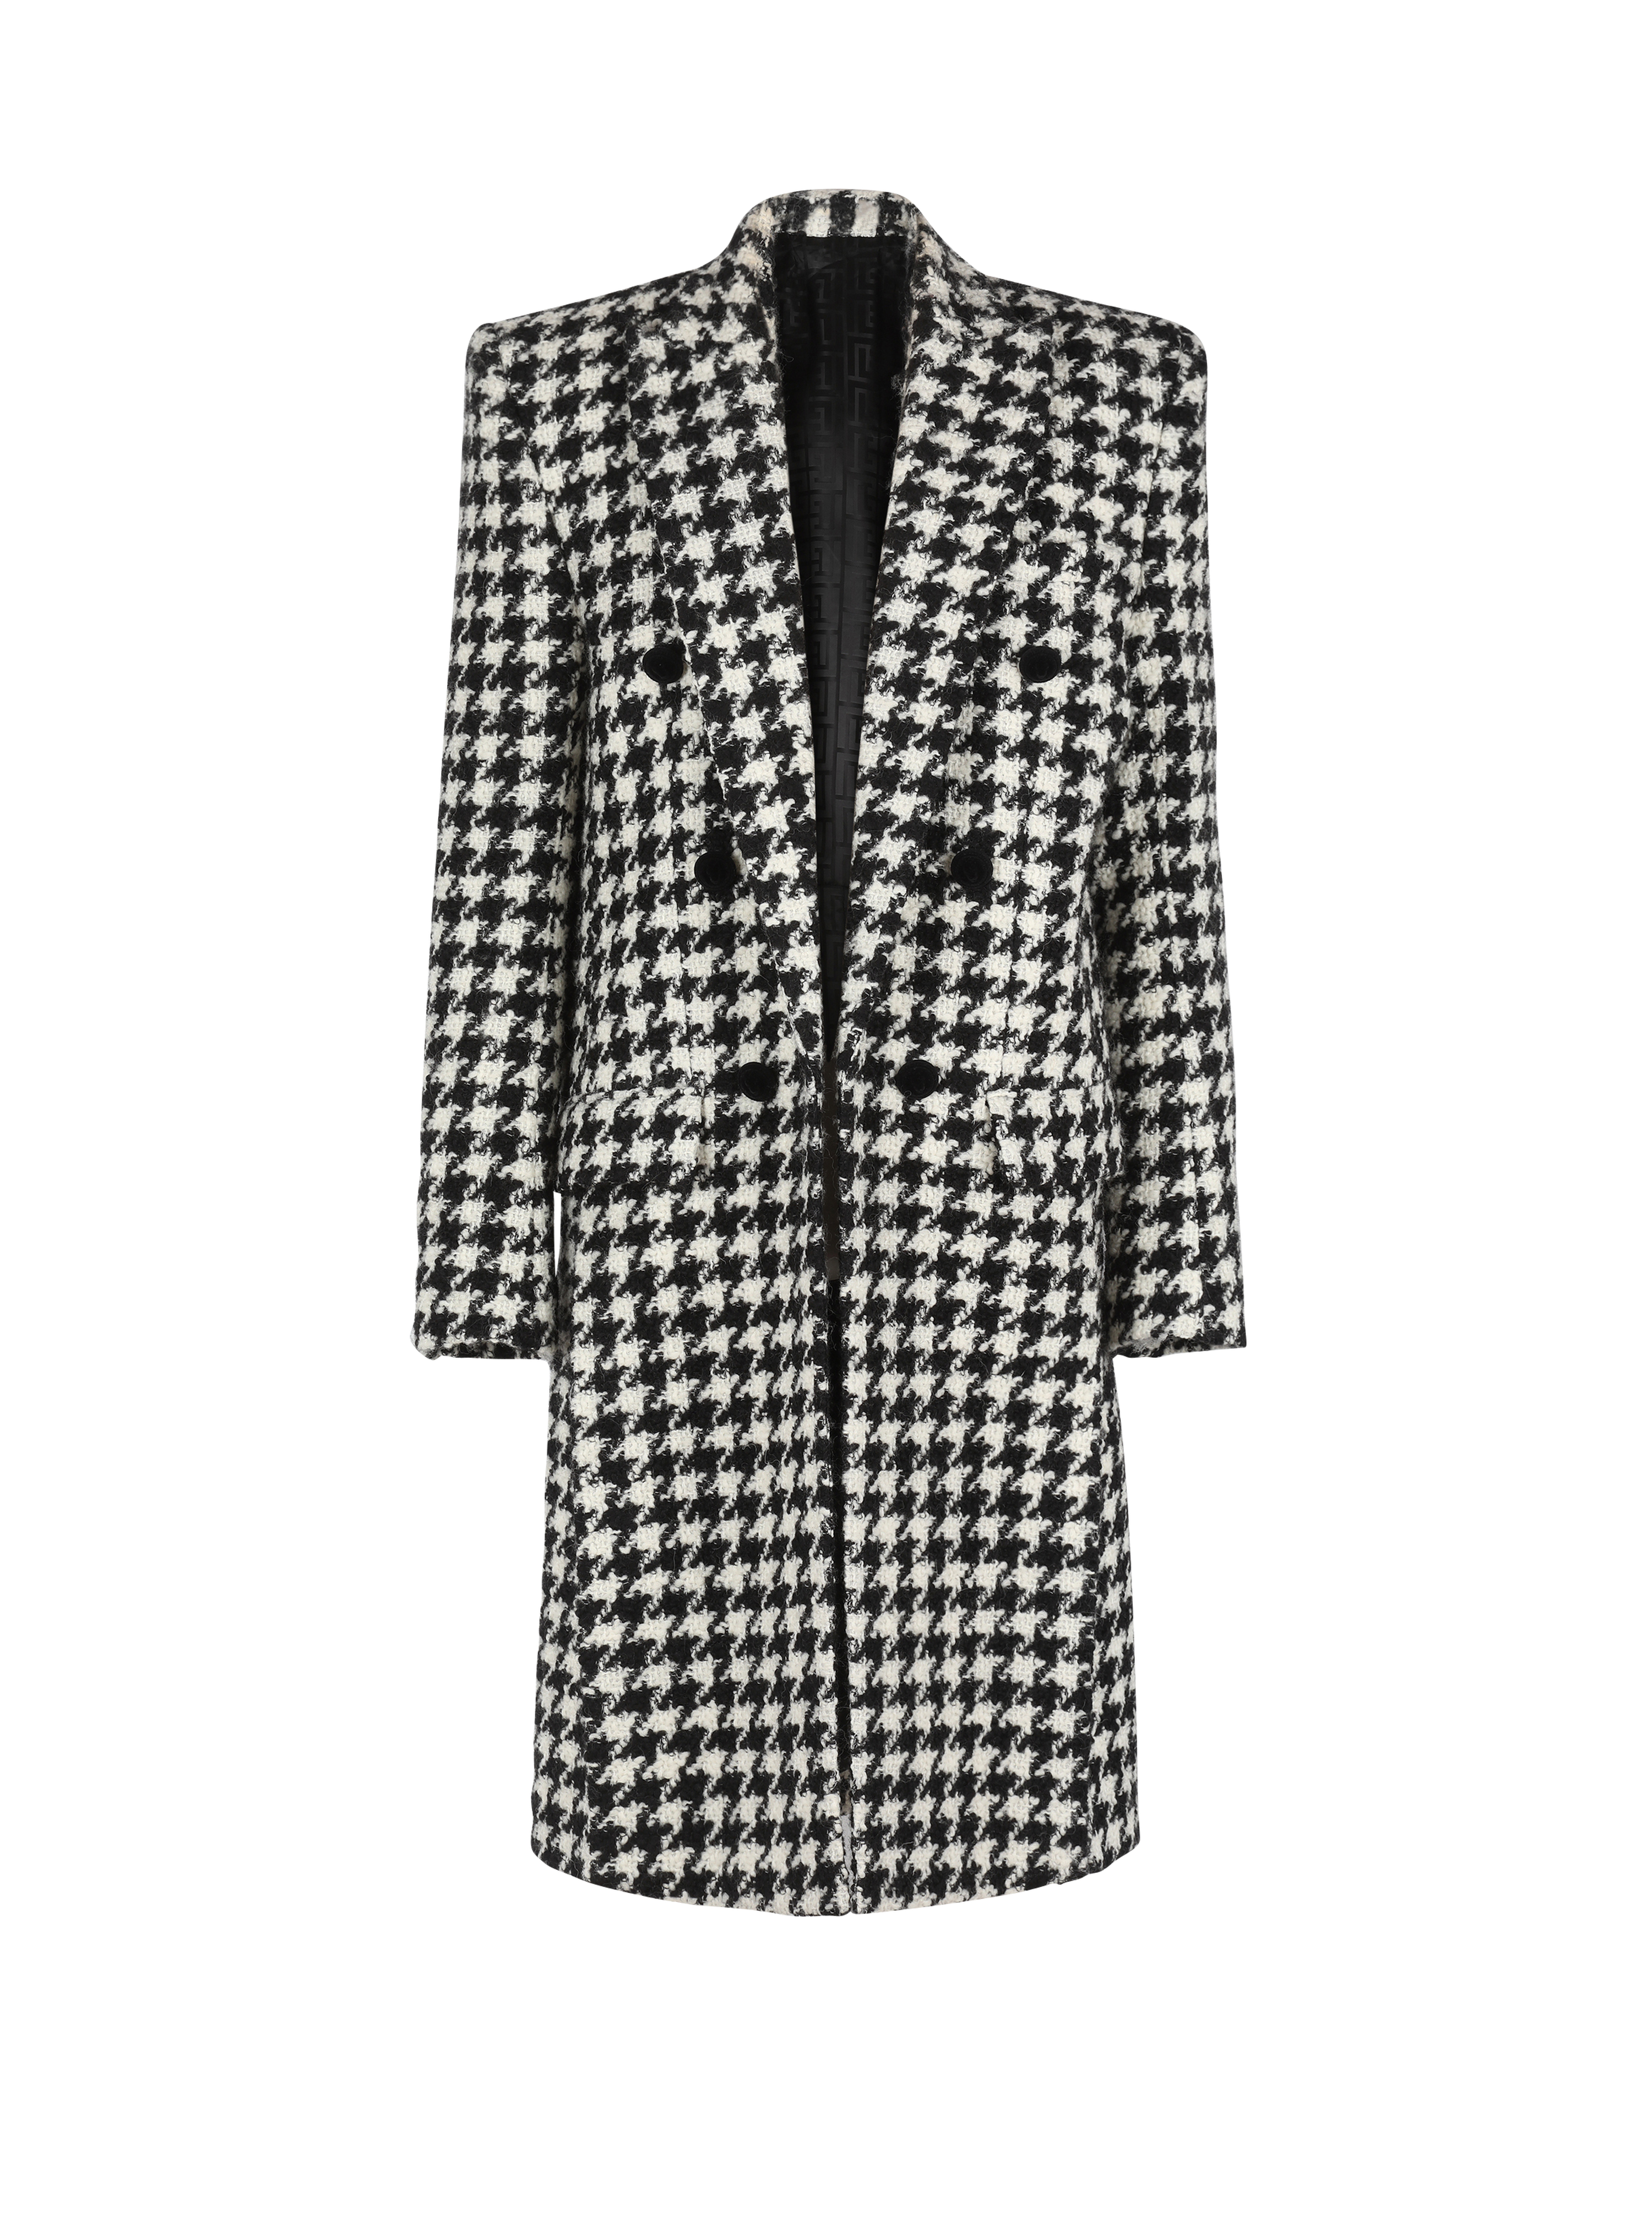 Unisex - Six-button wool coat with detachable inset jacket, black